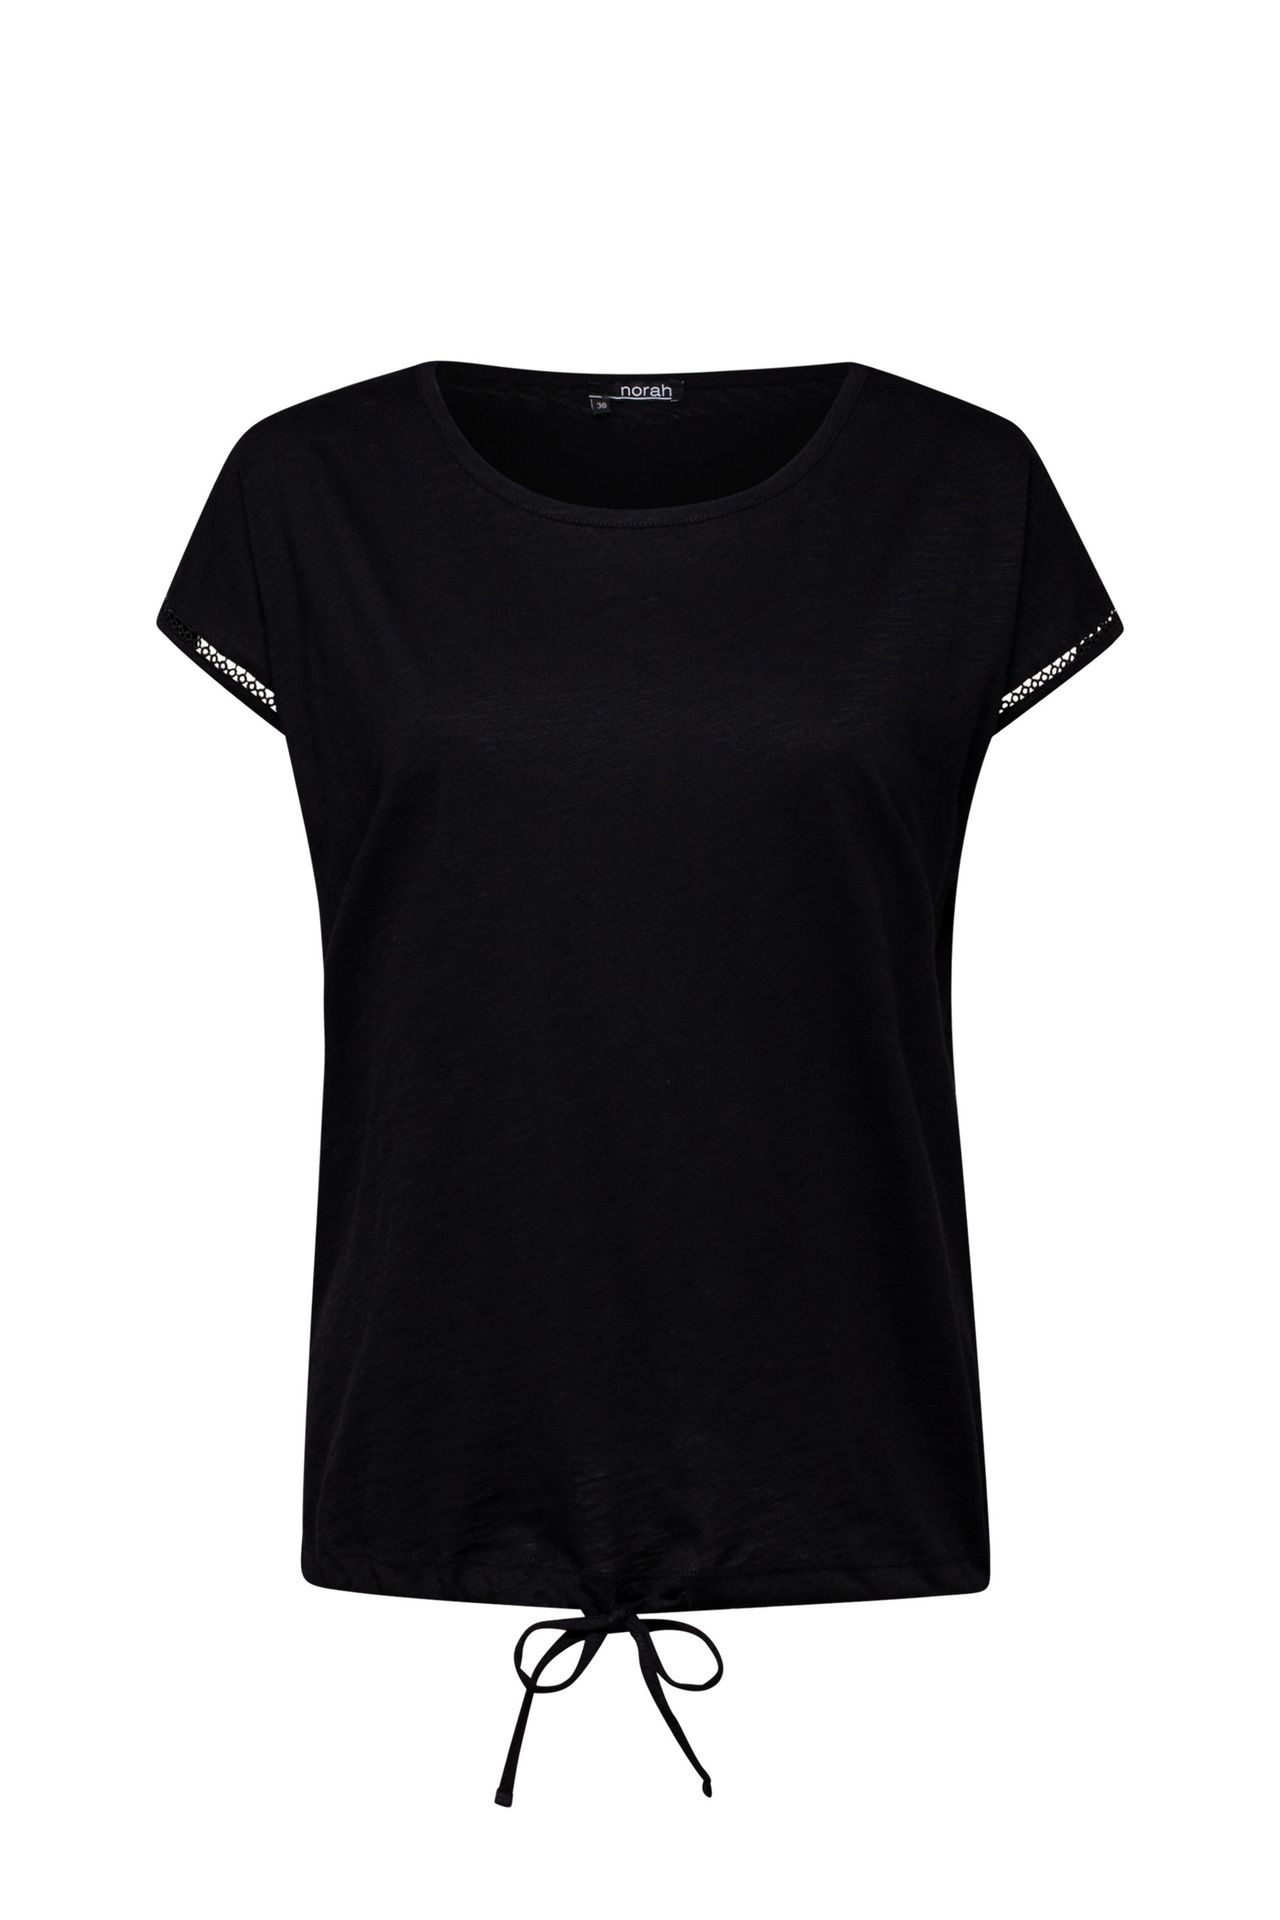 Norah Shirt zwart katoen black 209485-001